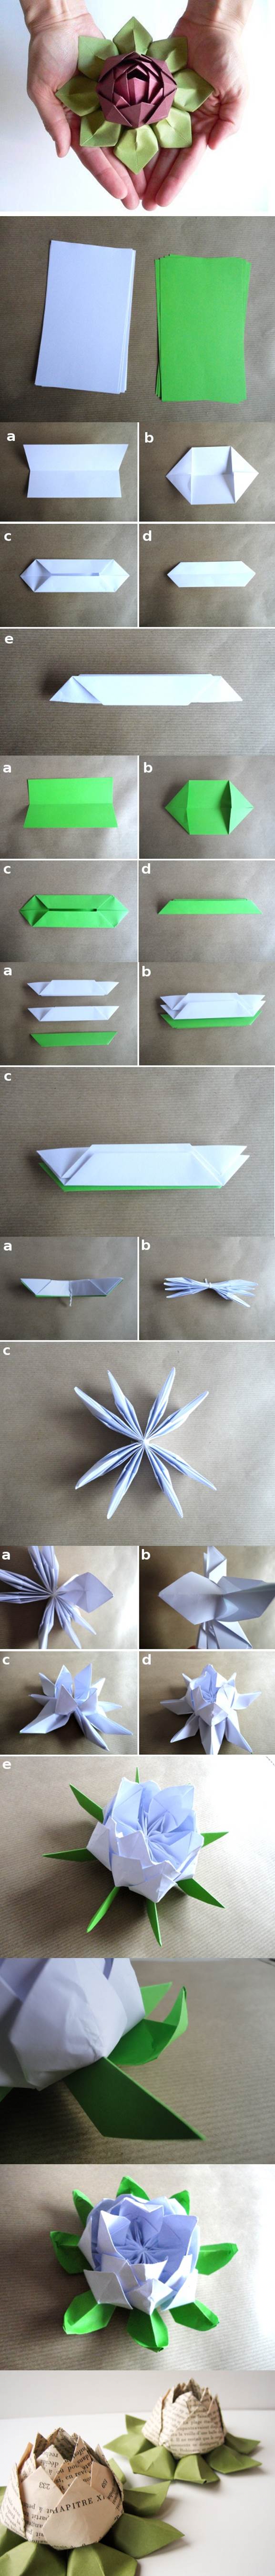 DIY Origami Lotus Flower 2